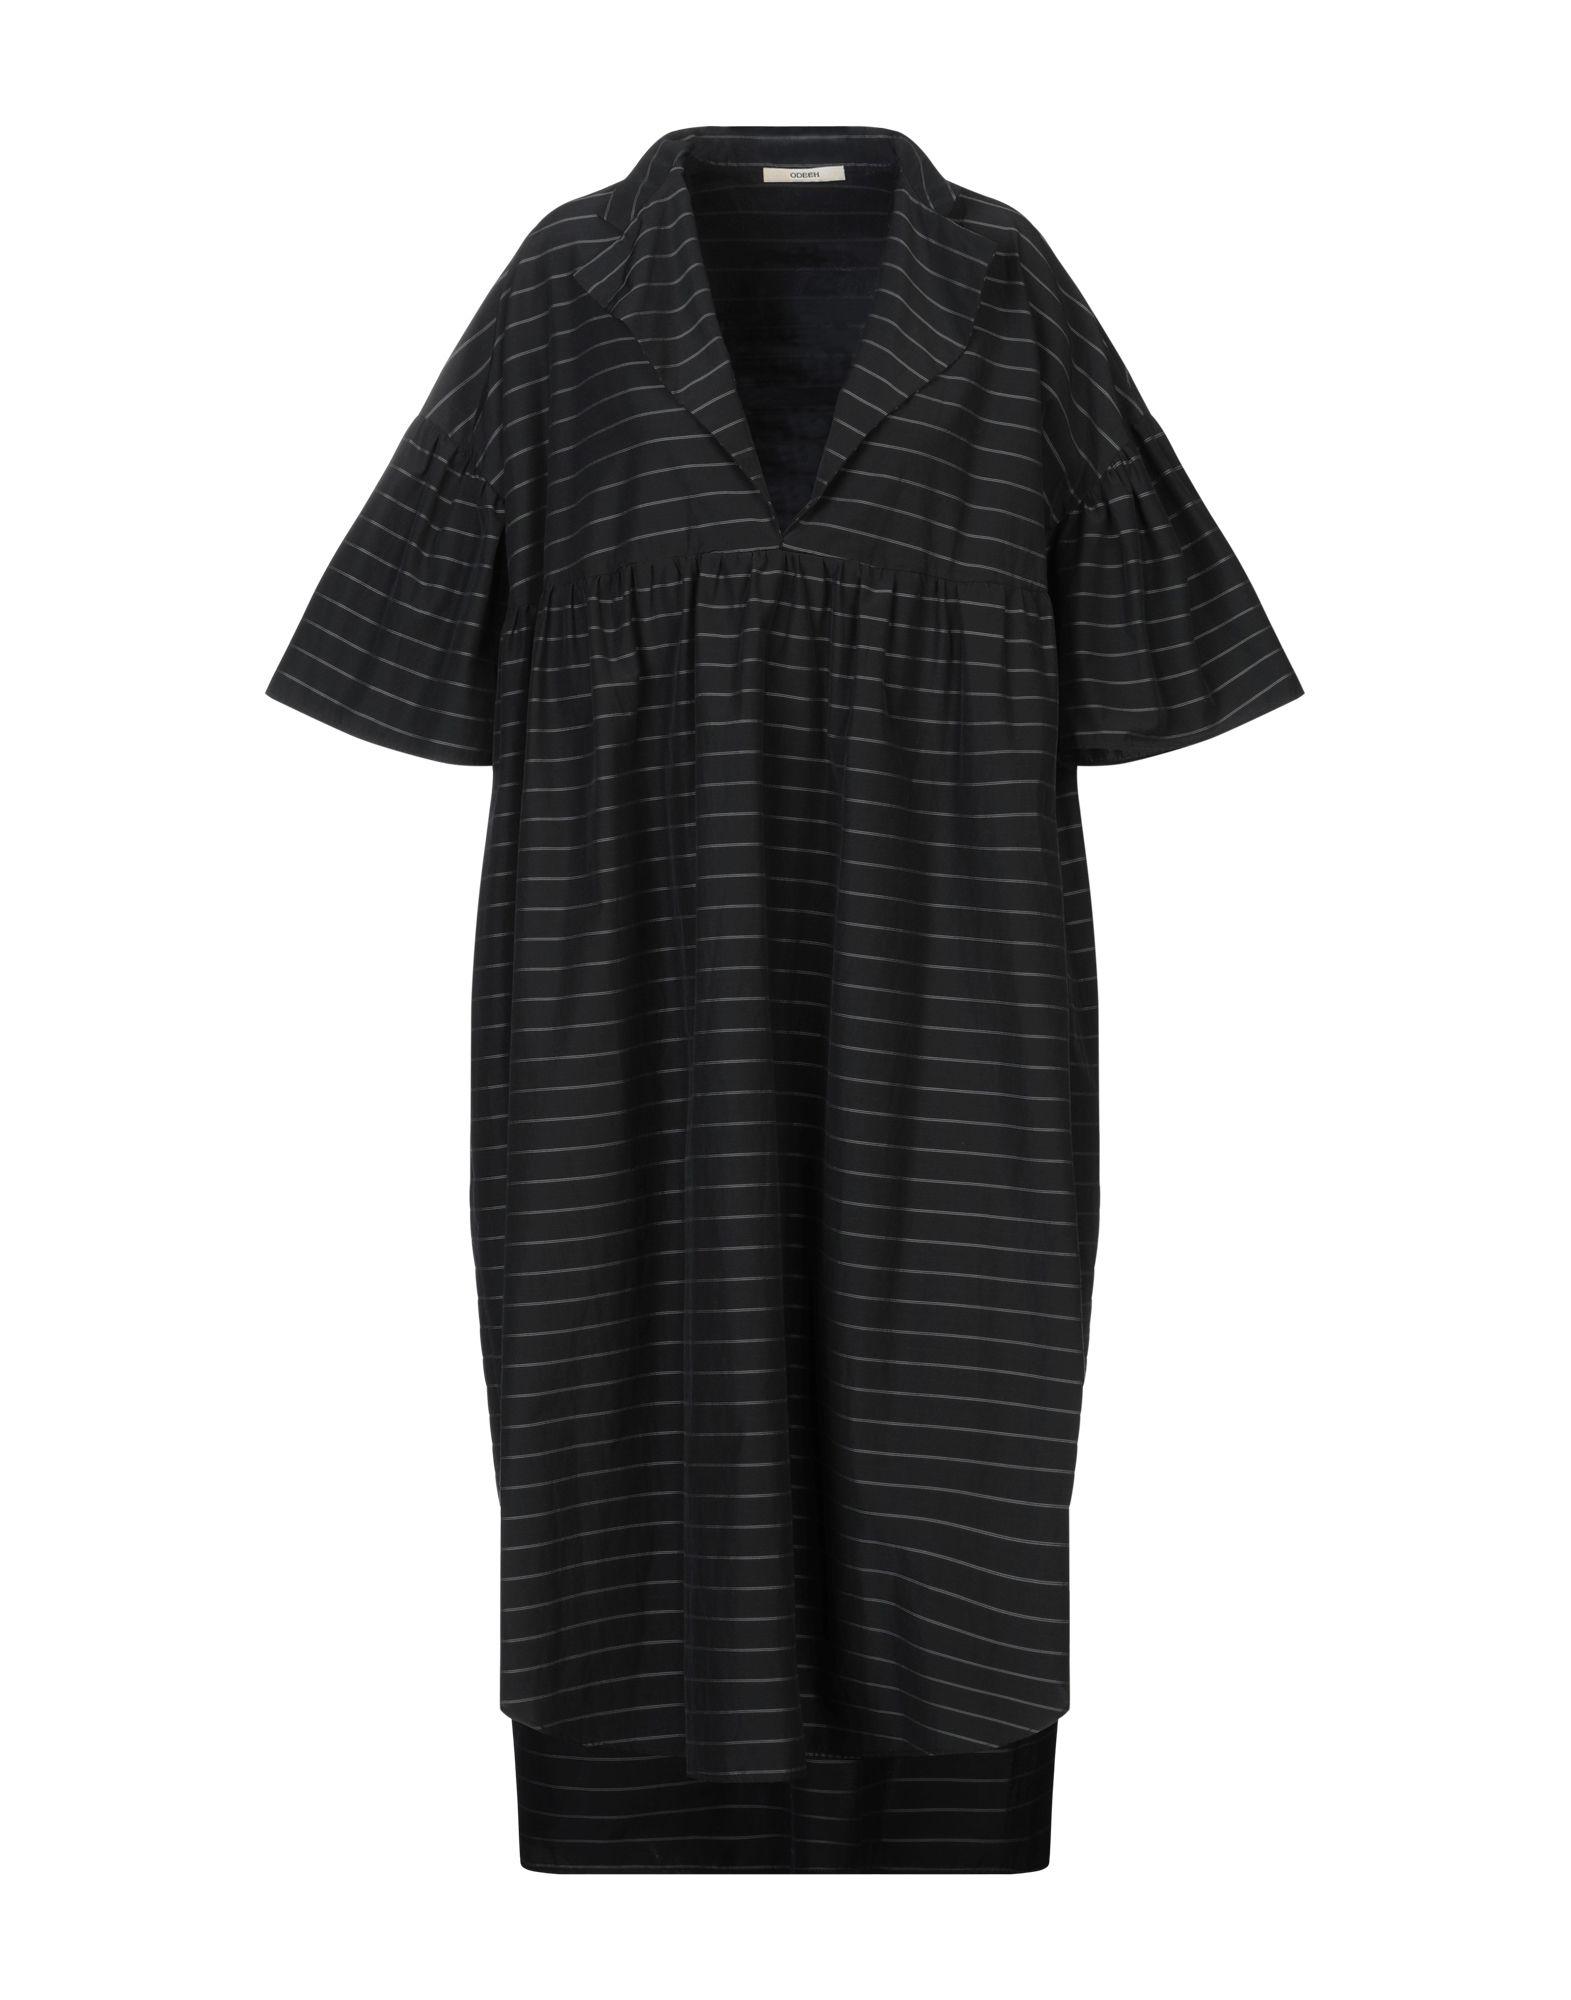 ODEEH Synthetic 3/4 Length Dress in Black - Lyst